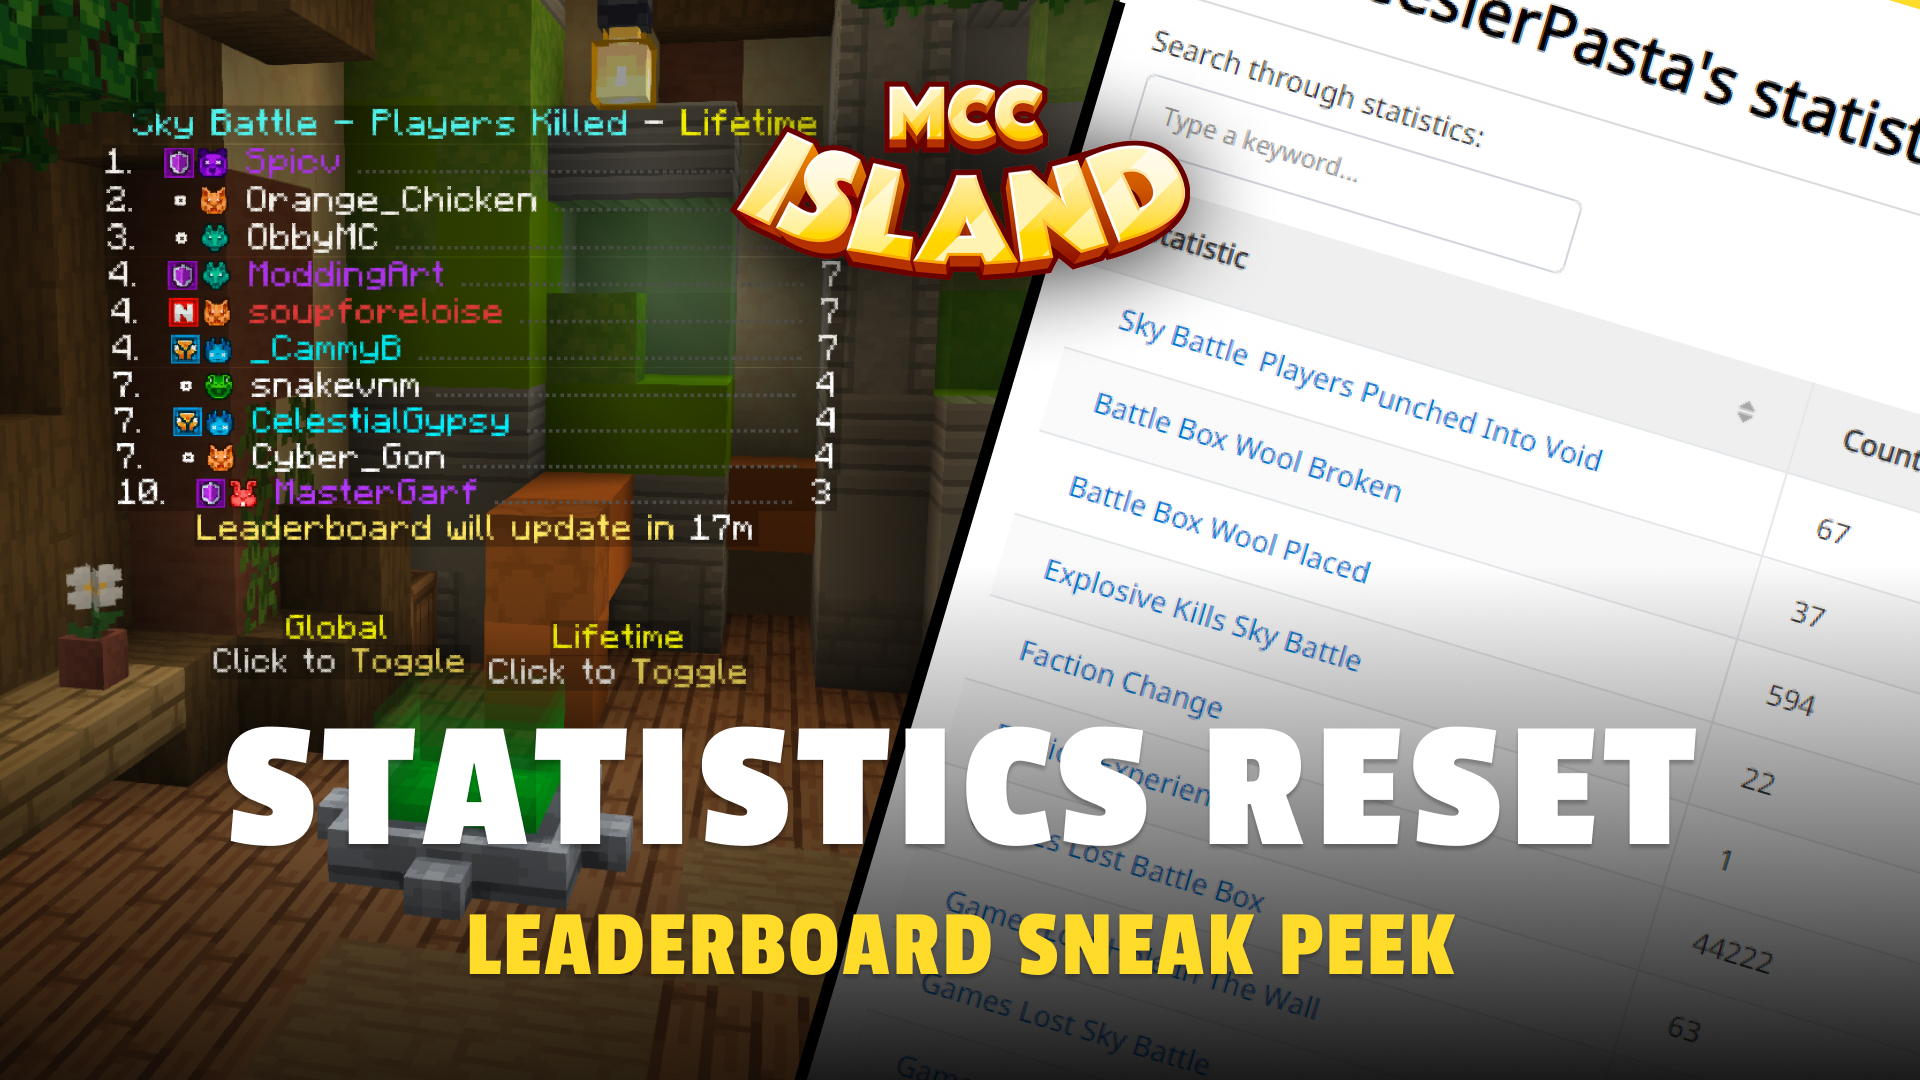 MCC Island Statistics Reset